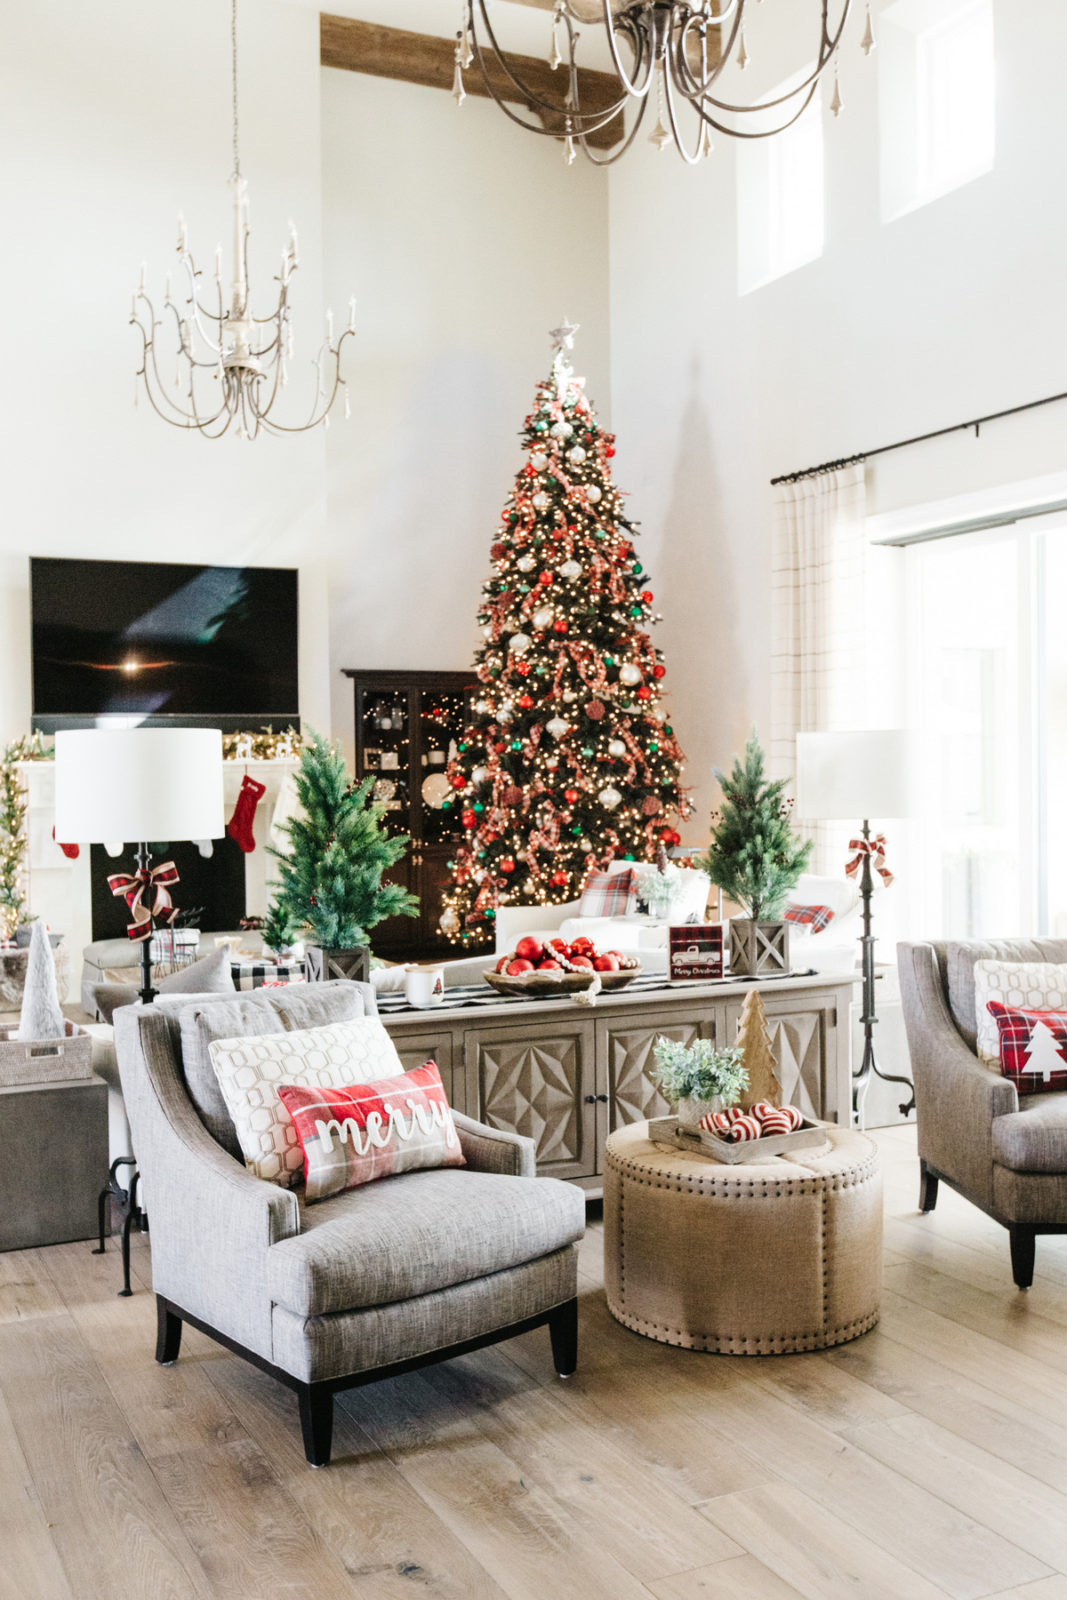 Christmas Dream Home | TomKat Decorating | The TomKat Studio Blog